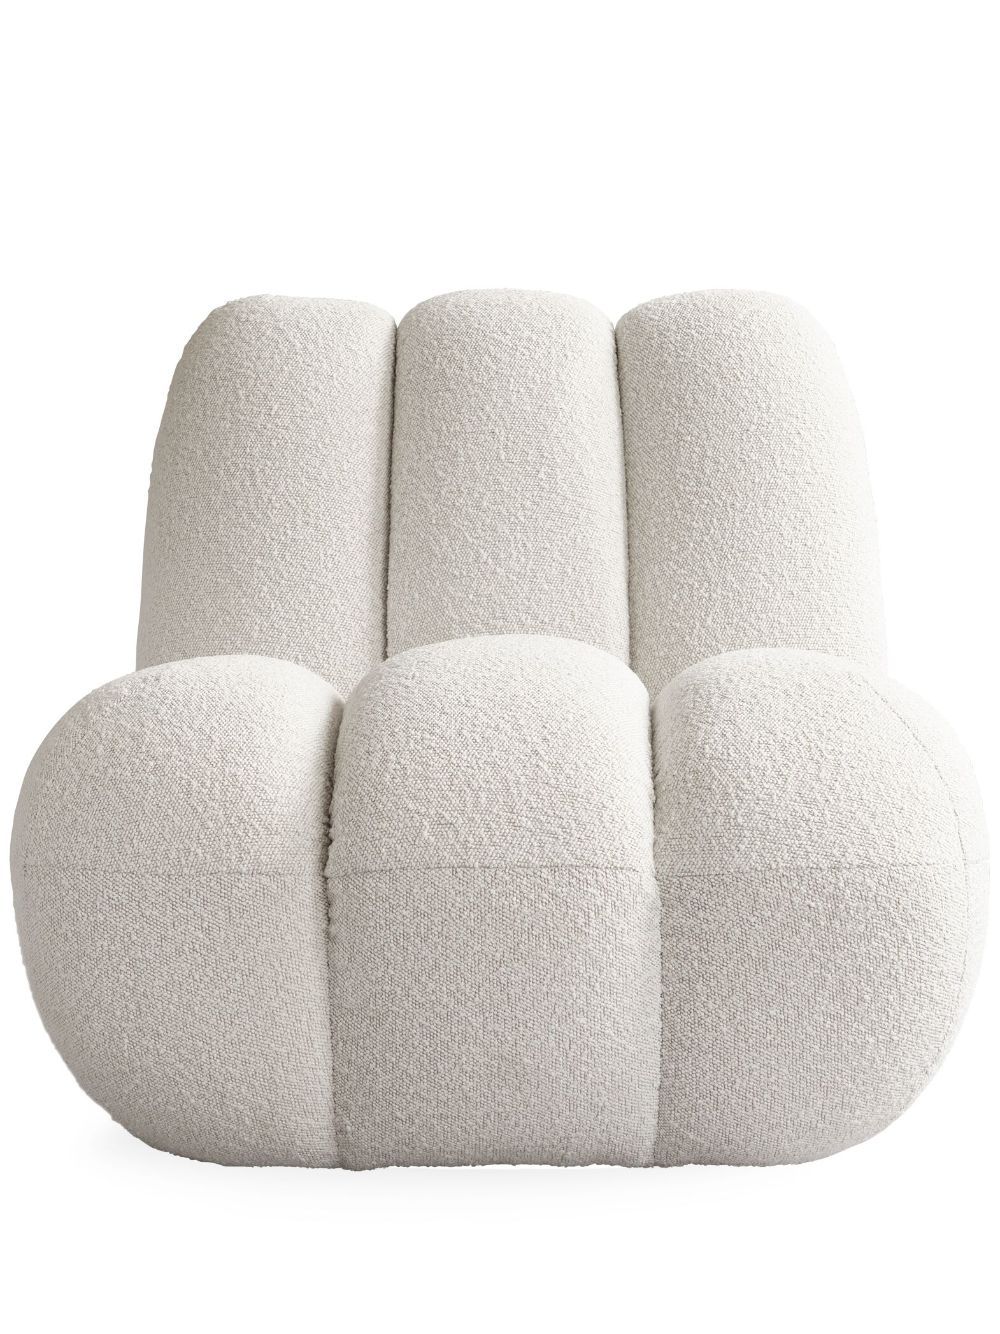 The Details101 CopenhagenToe bouclé lounge chair ImportedHighlightsoff-white alpaca wool bouclé... | Farfetch Global